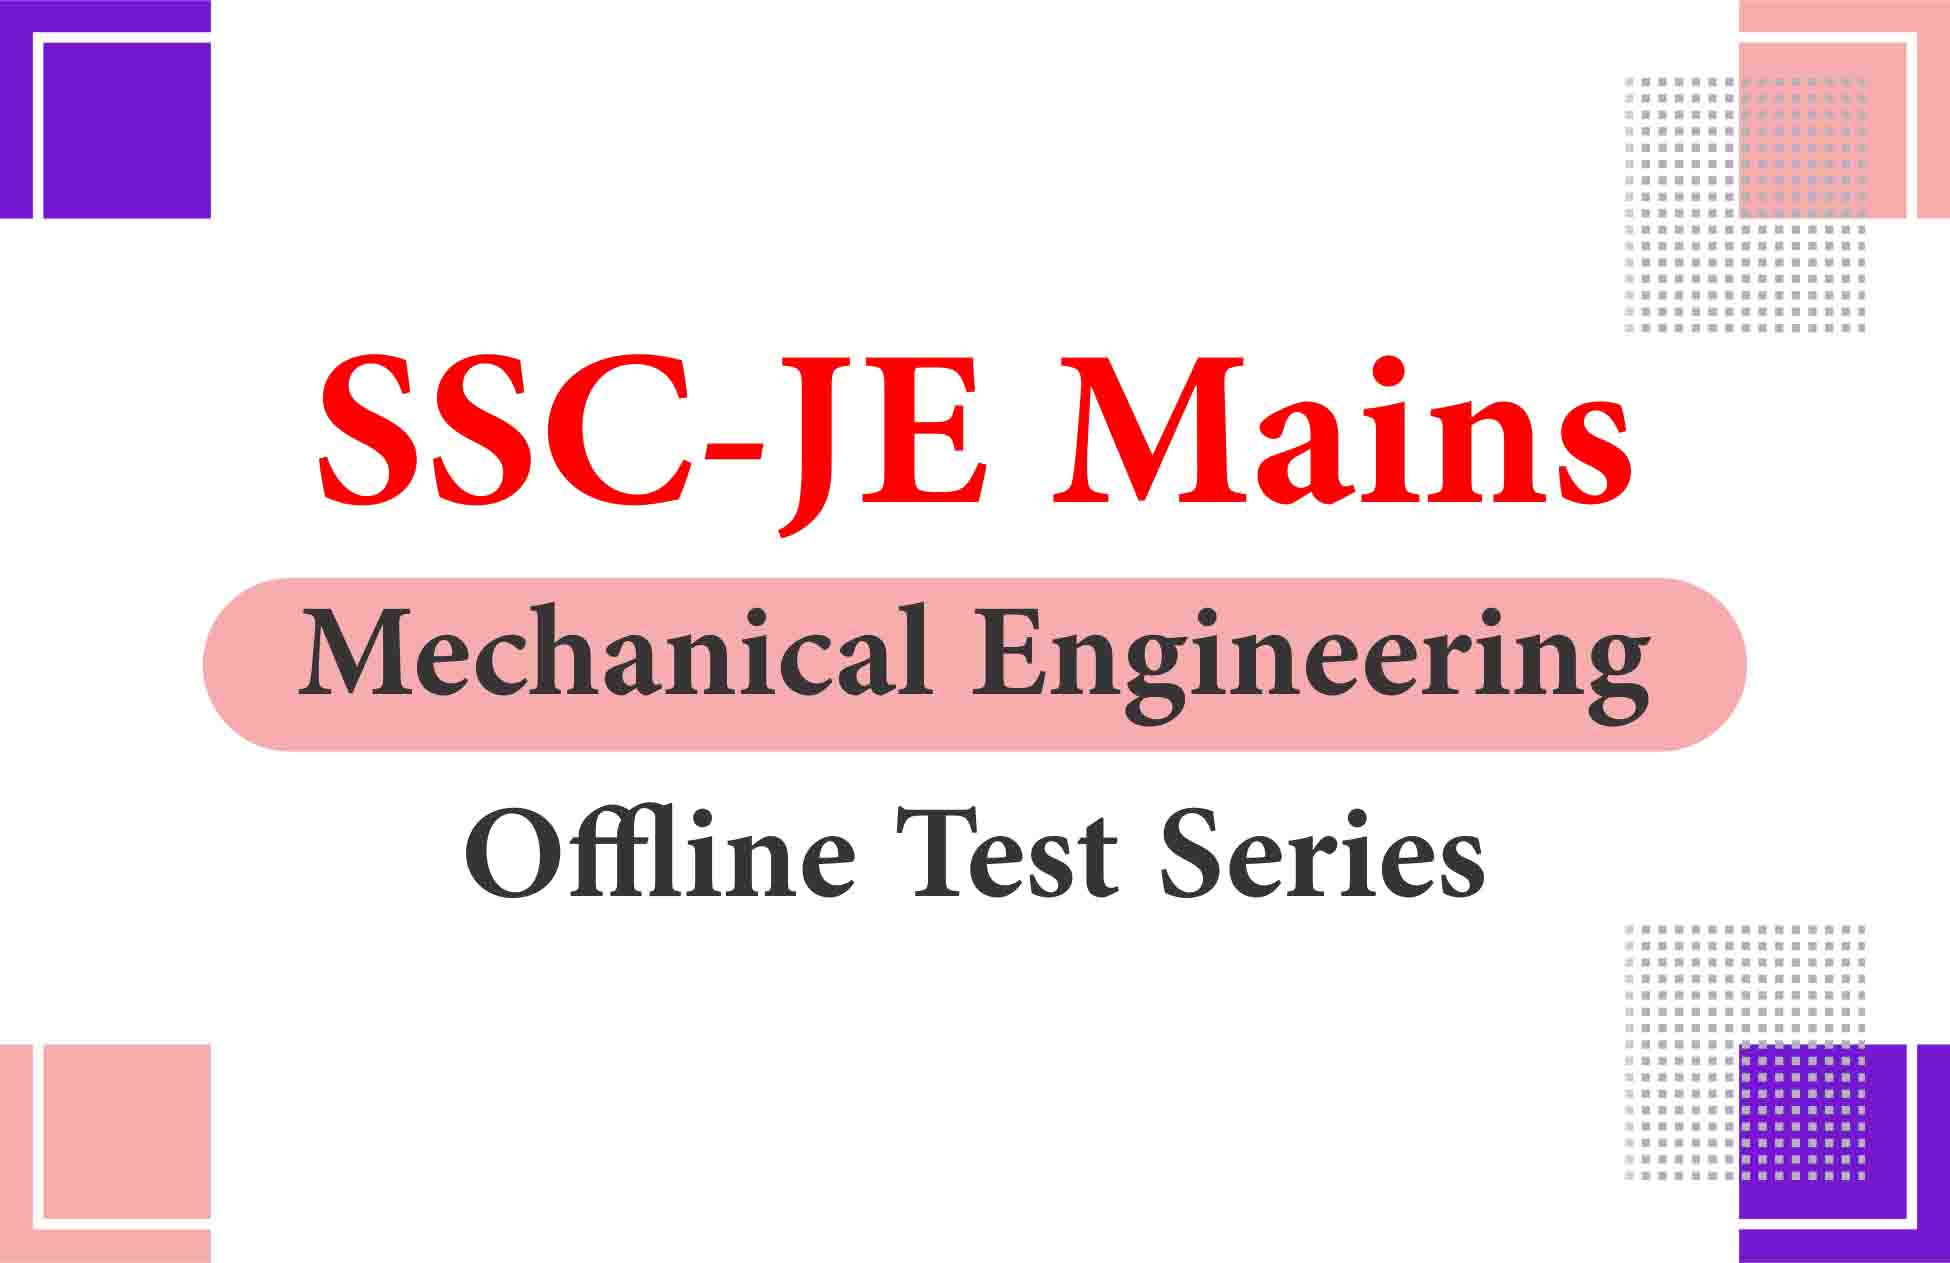 SSC JE Mains Mechanical Engineering Offline Test Series